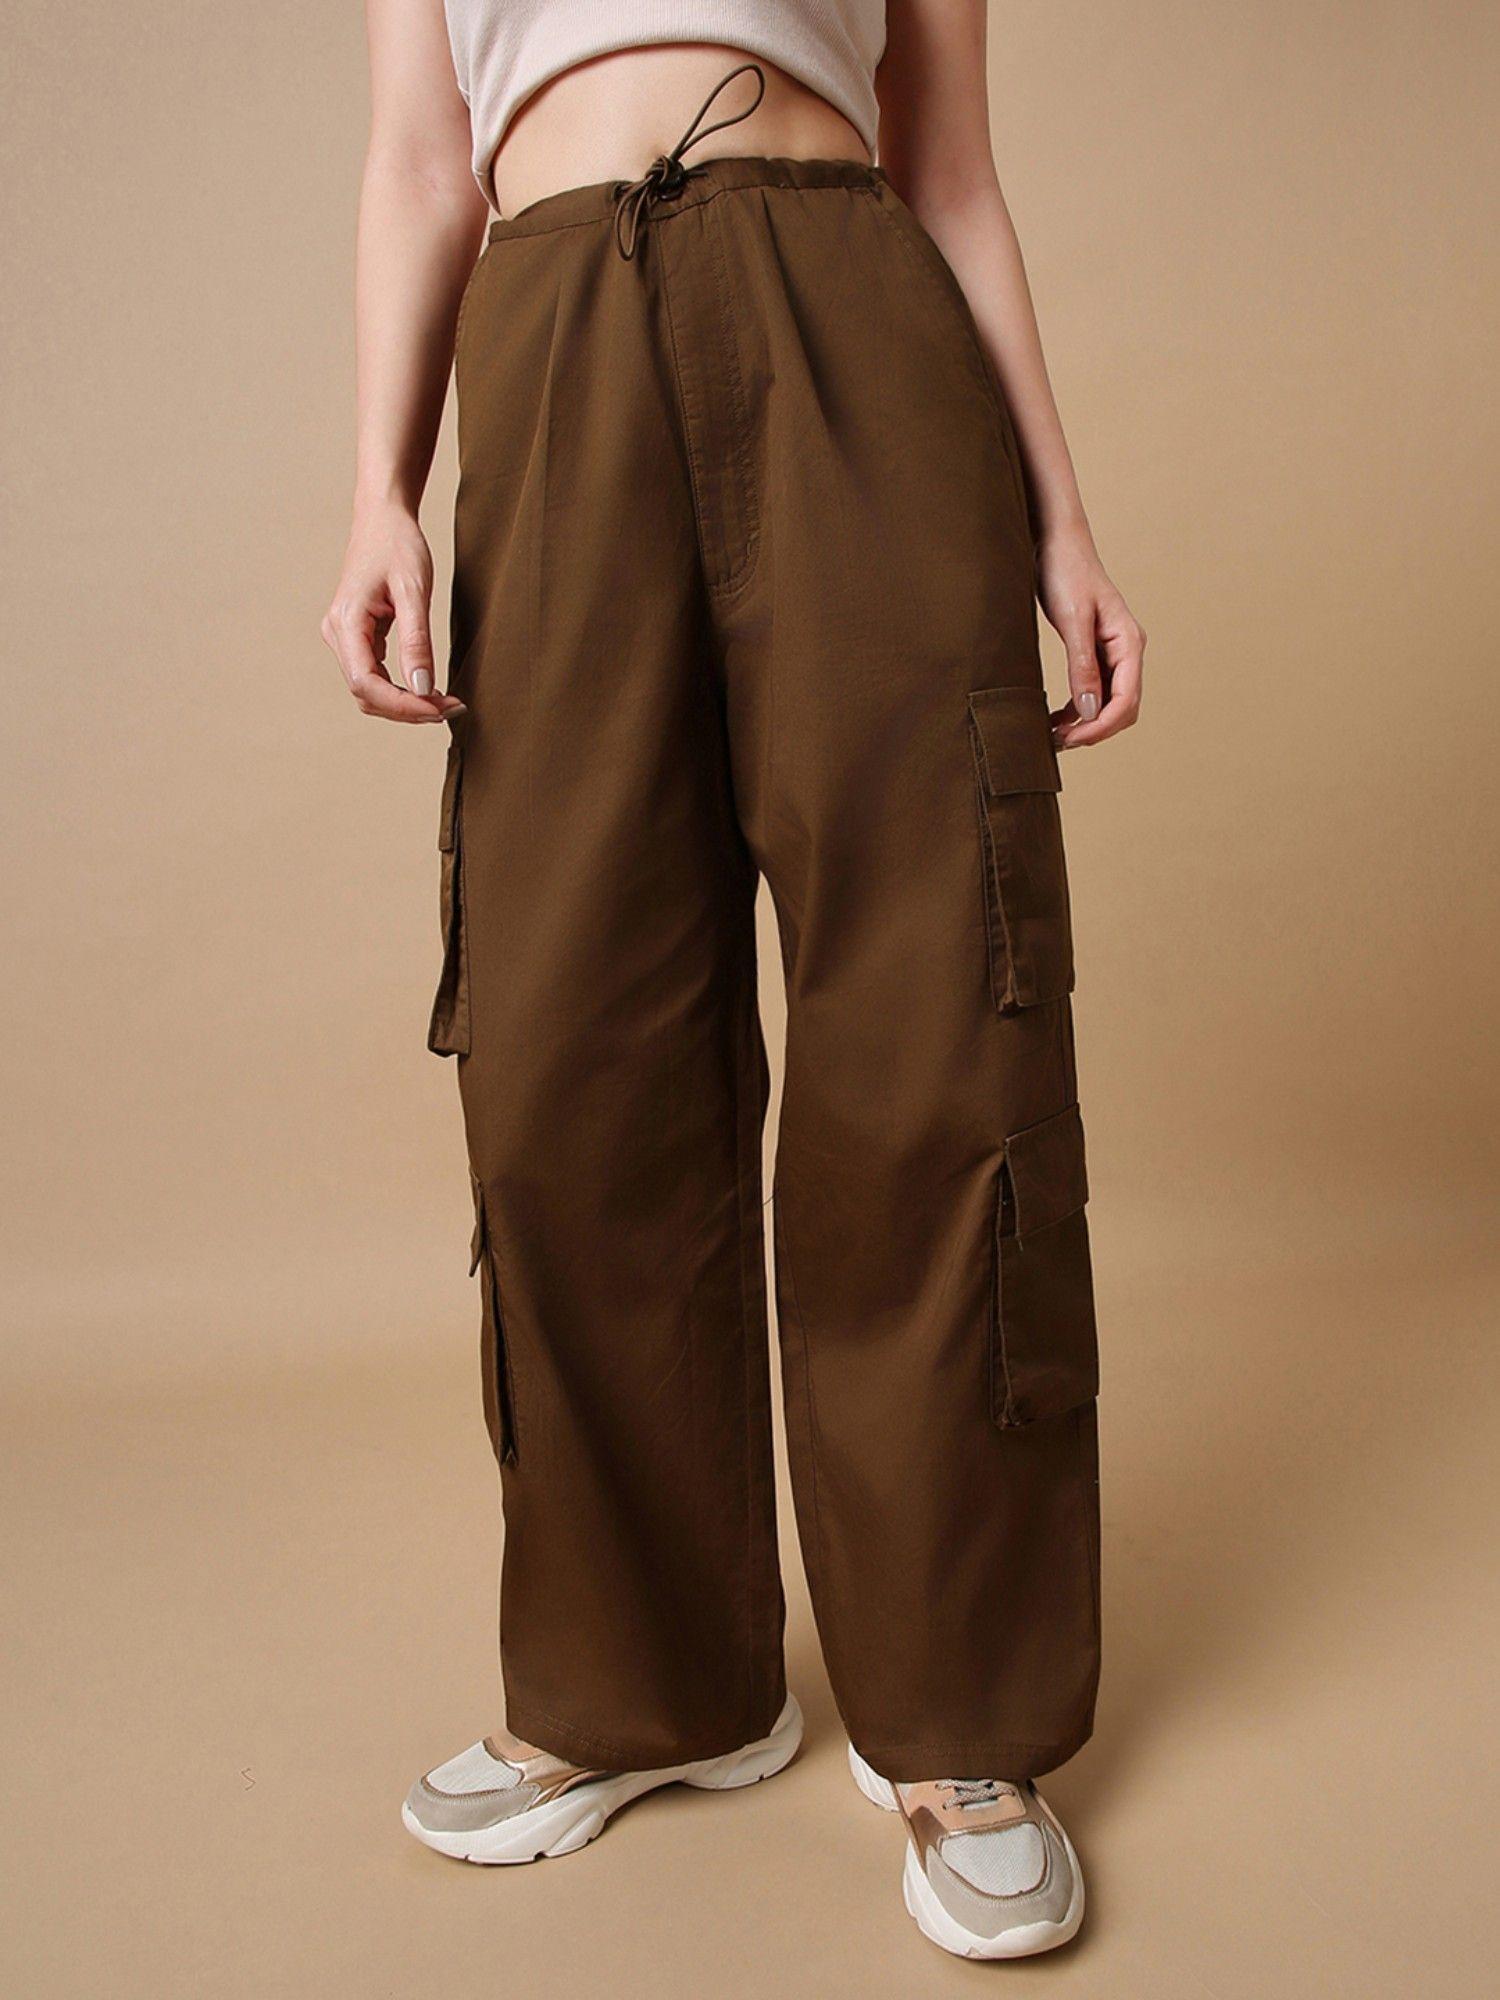 x womens brown oversized cargo parachute pants